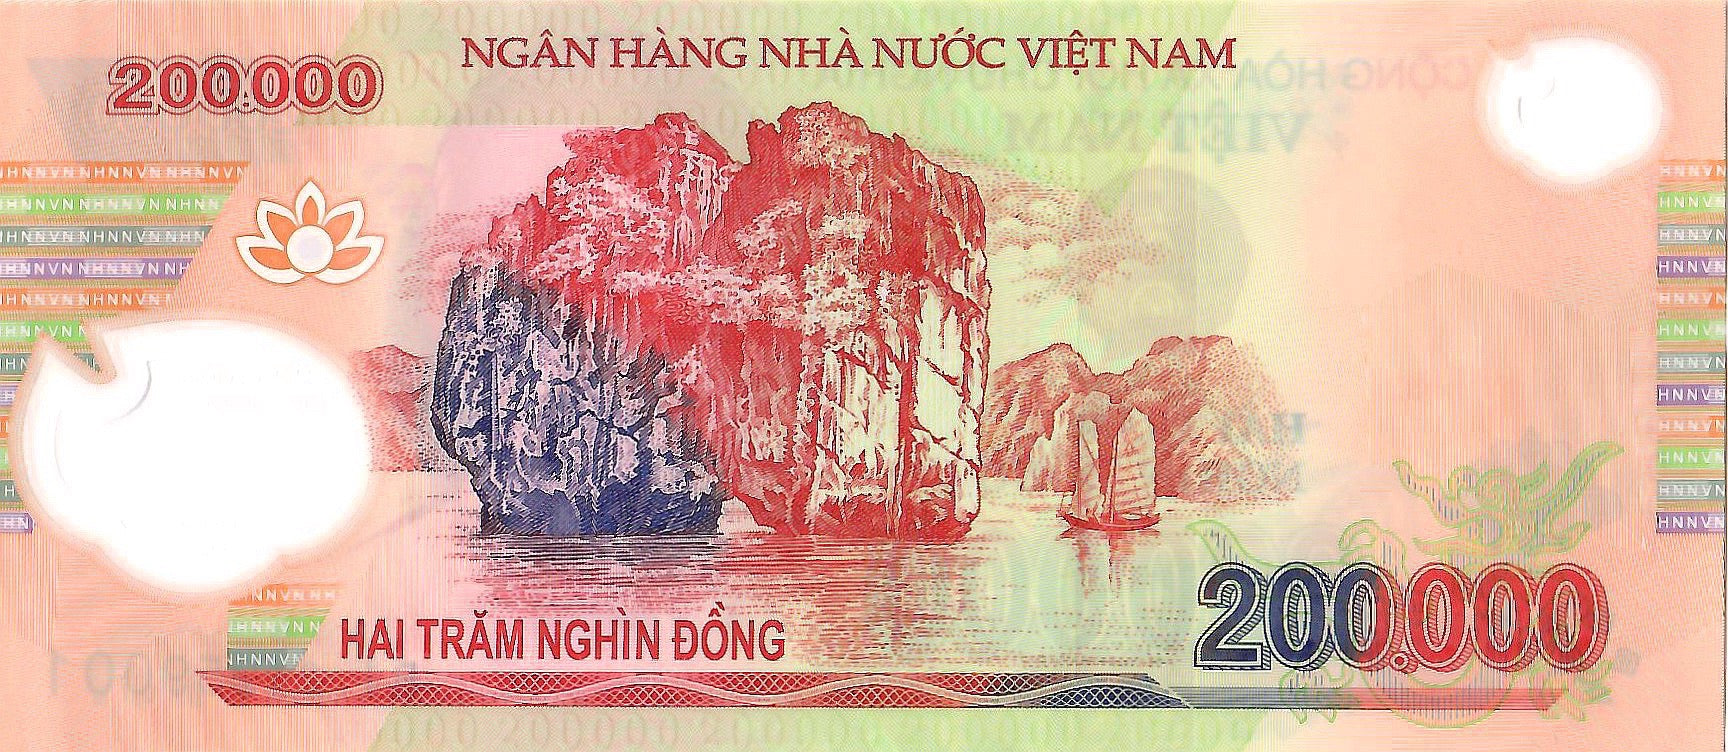 Vietnam 200,000 Dong Banknote, 2020, P-123k, UNC, Polymer